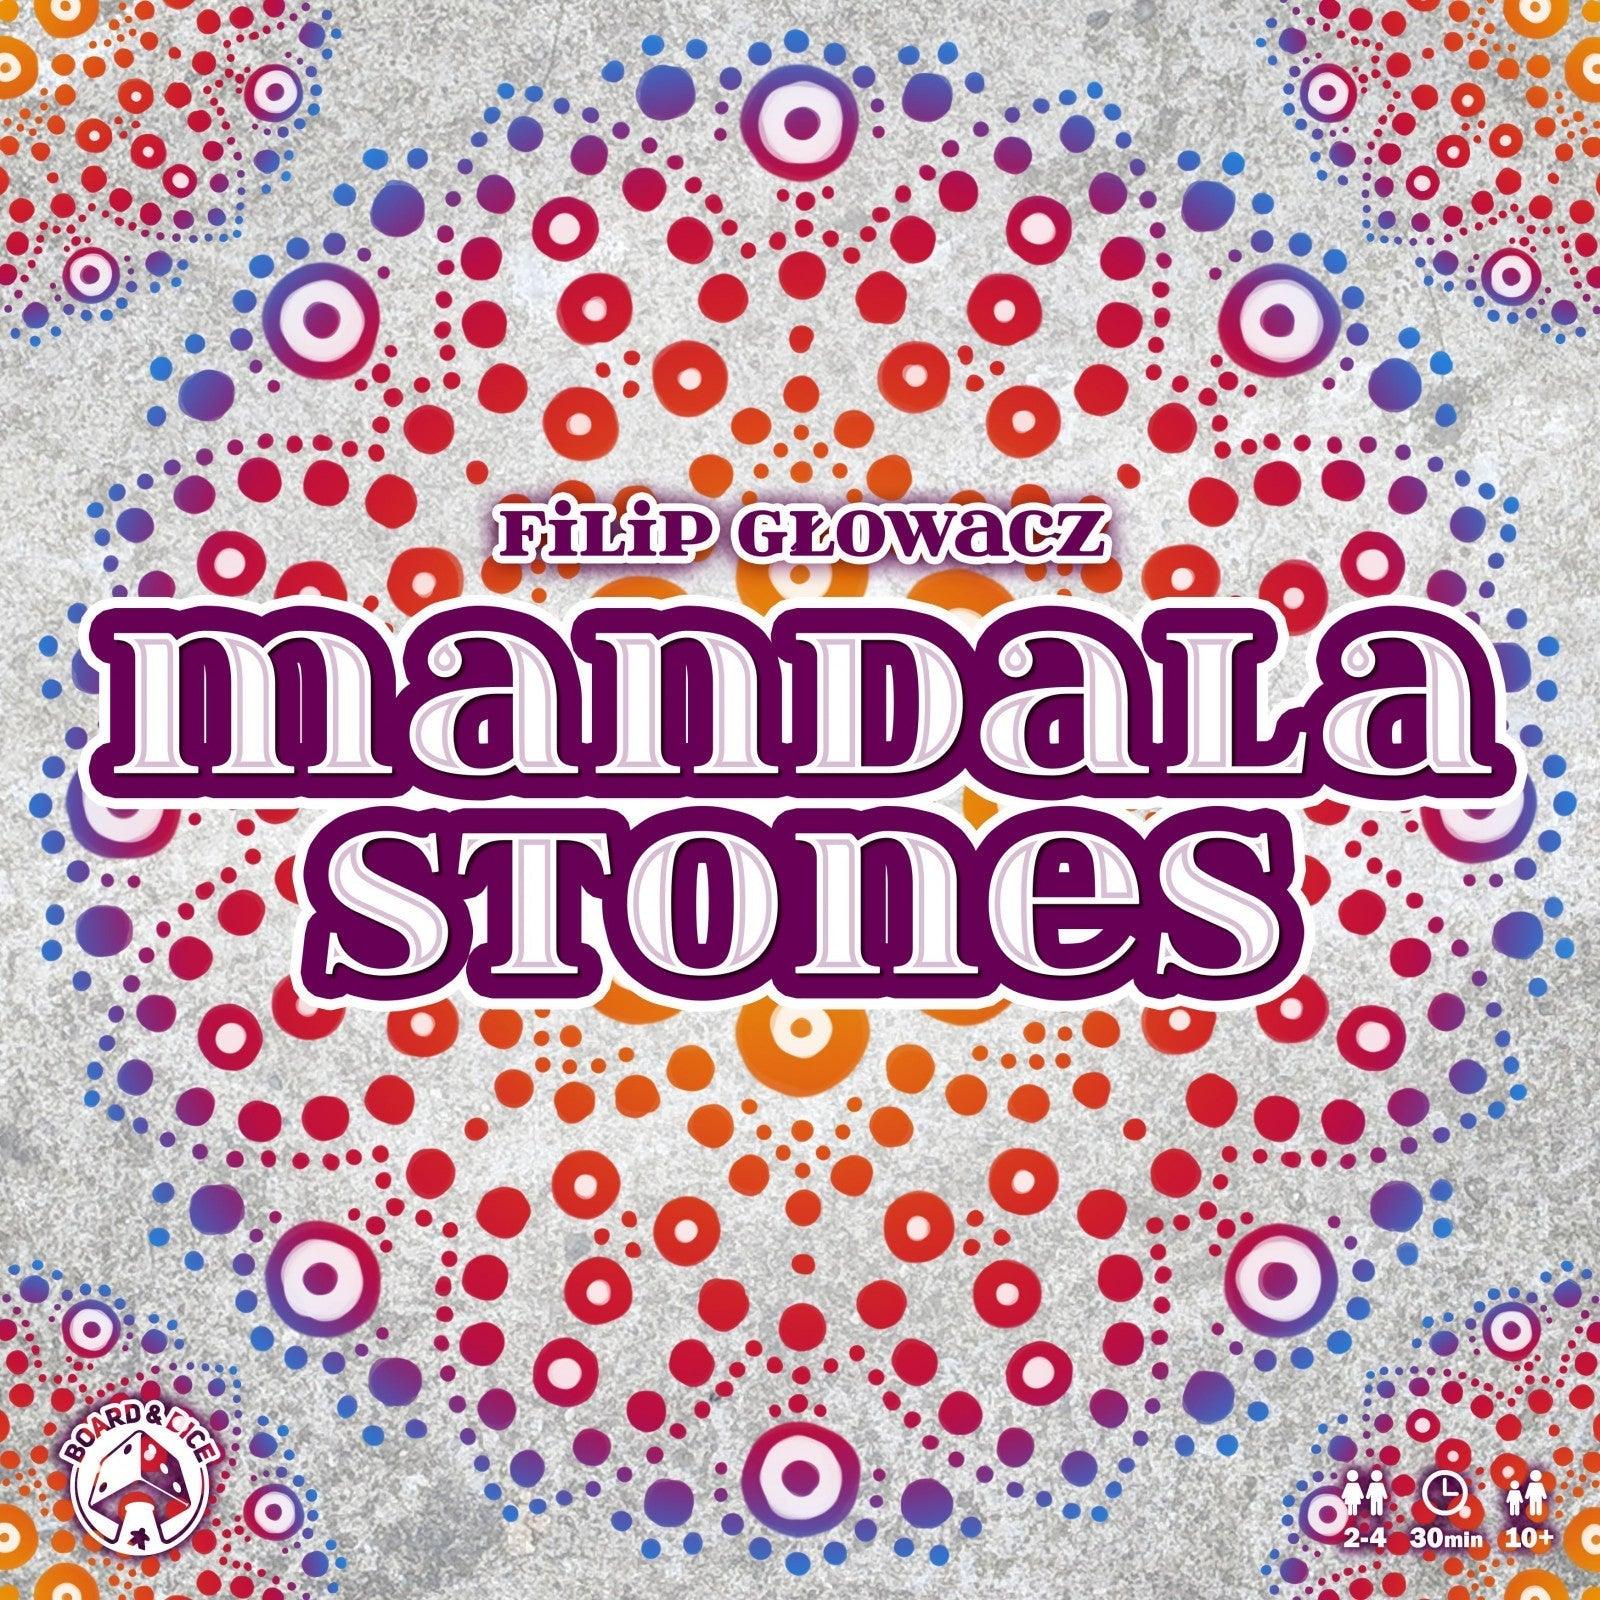 VR-86290 Mandala Stones - Board & Dice - Titan Pop Culture